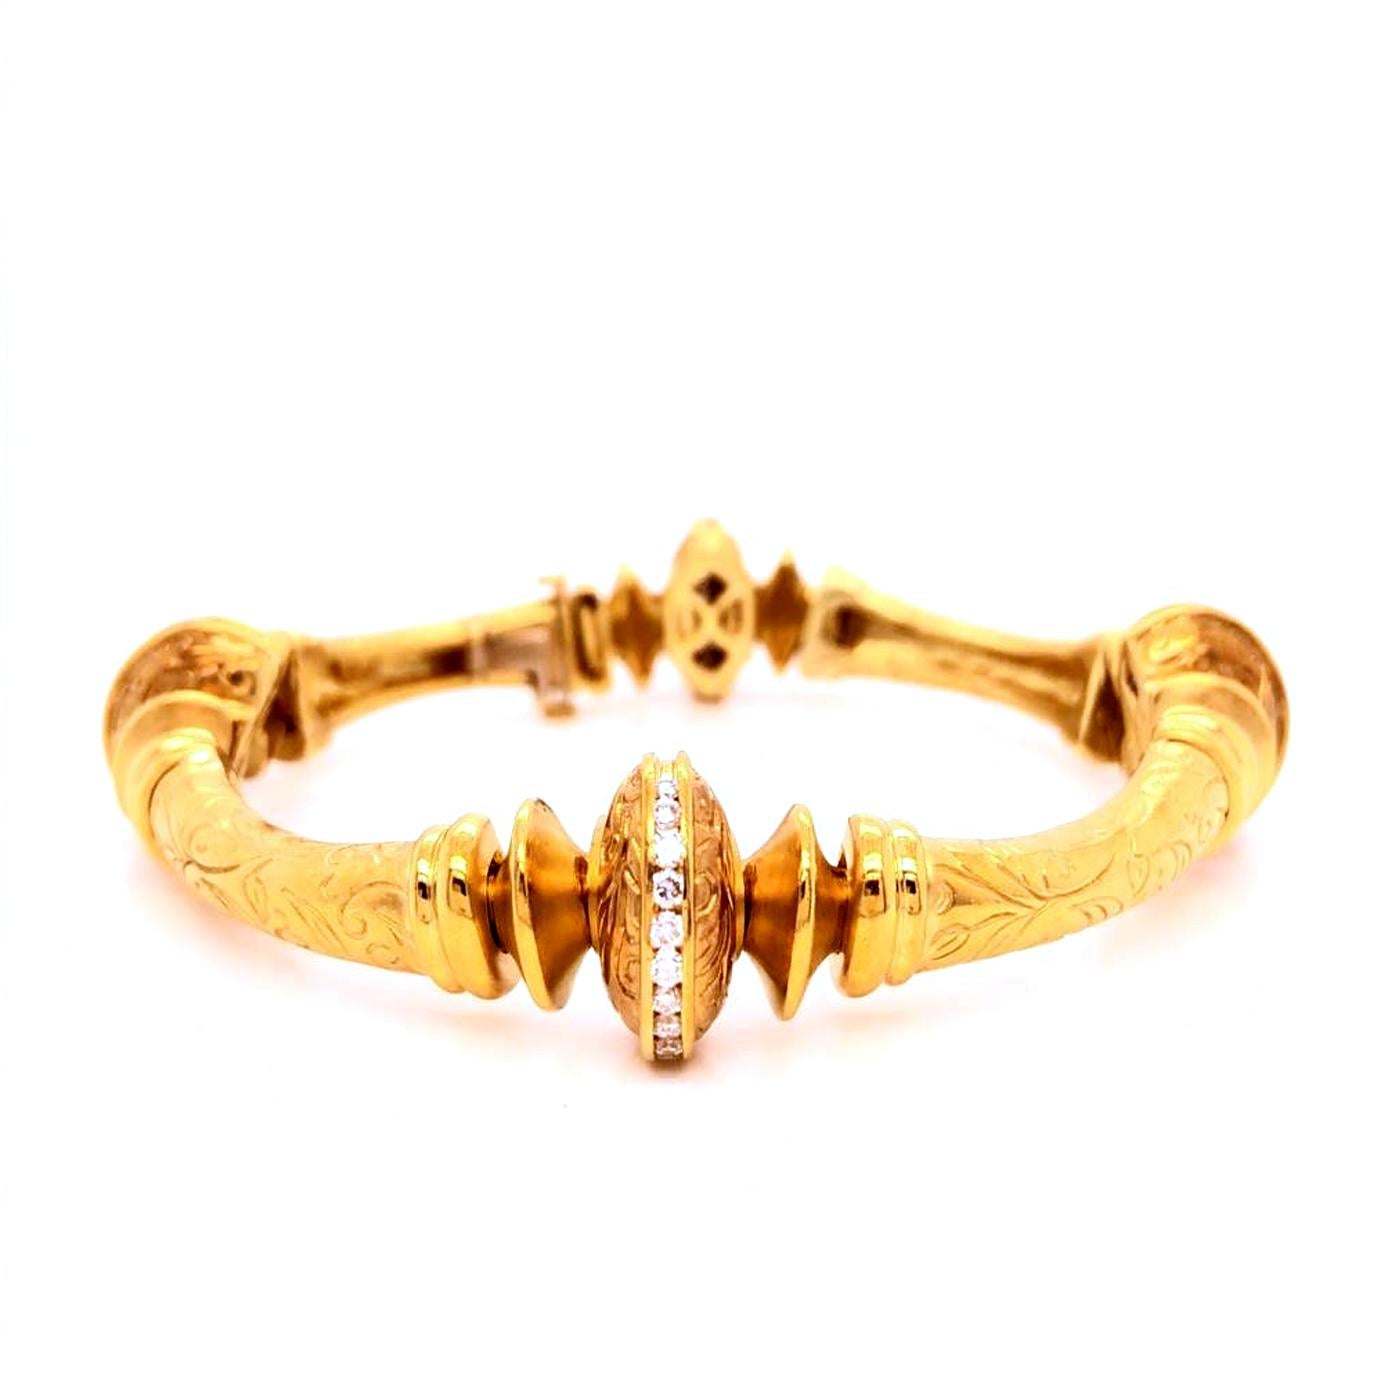 Romantic 18 Karat Gold with 40 Round Diamonds Bracelet 0.50 Carat VVS1 Clarity 43.2g